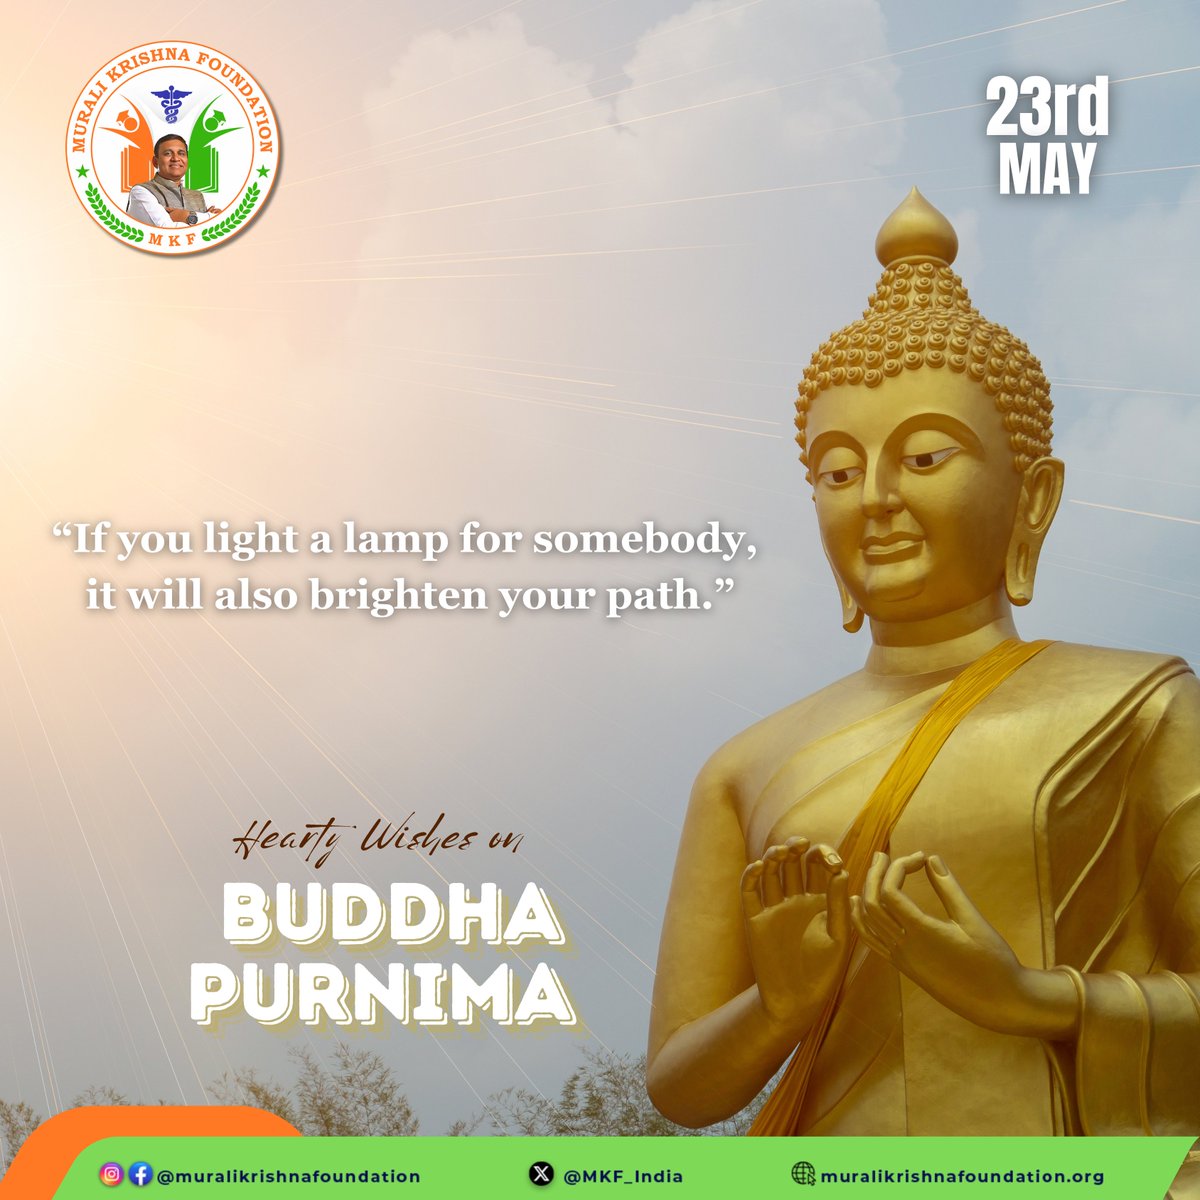 On the auspicious occasion of Buddha Purnima, may the light of wisdom illuminate our paths. 🙏✨

#muralikrishnafoundation #dmuralikrishna #mkf #MKFoundation #Bargarh #Odisha #BuddhaPurnima #buddha